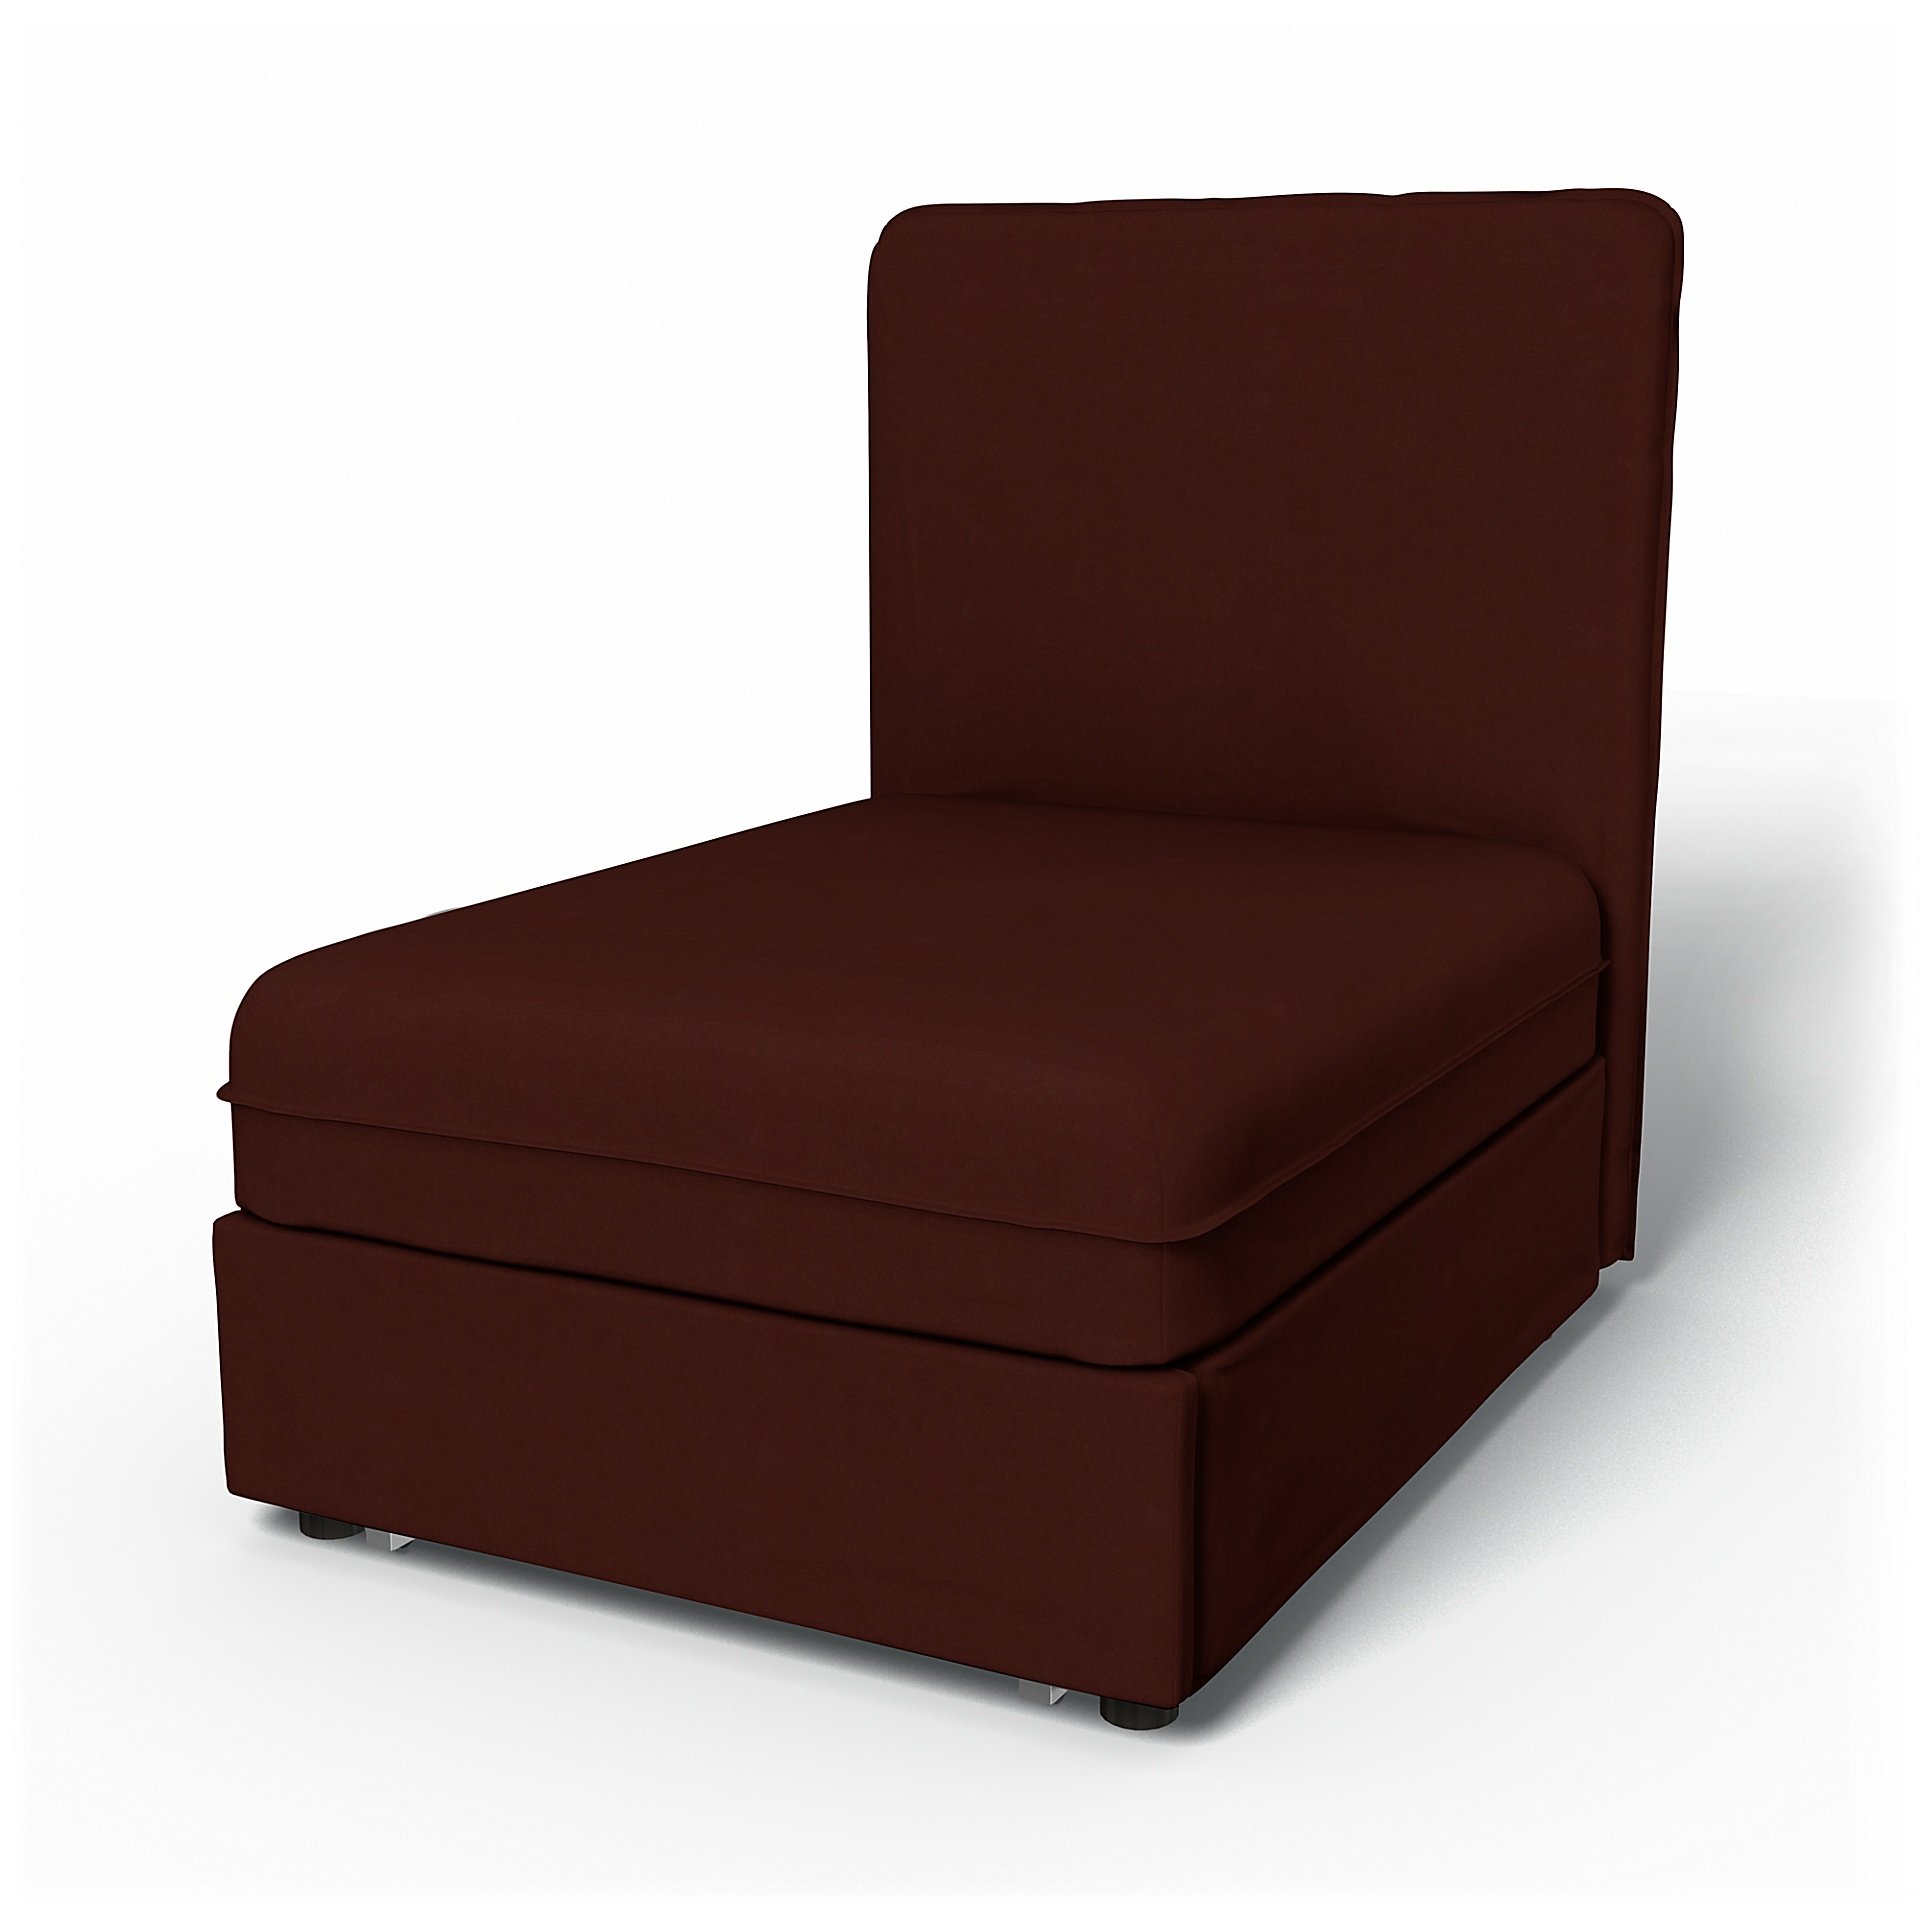 IKEA - Vallentuna Seat Module with High Back Sofa Bed Cover (80x100x46cm), Ground Coffee, Velvet - B